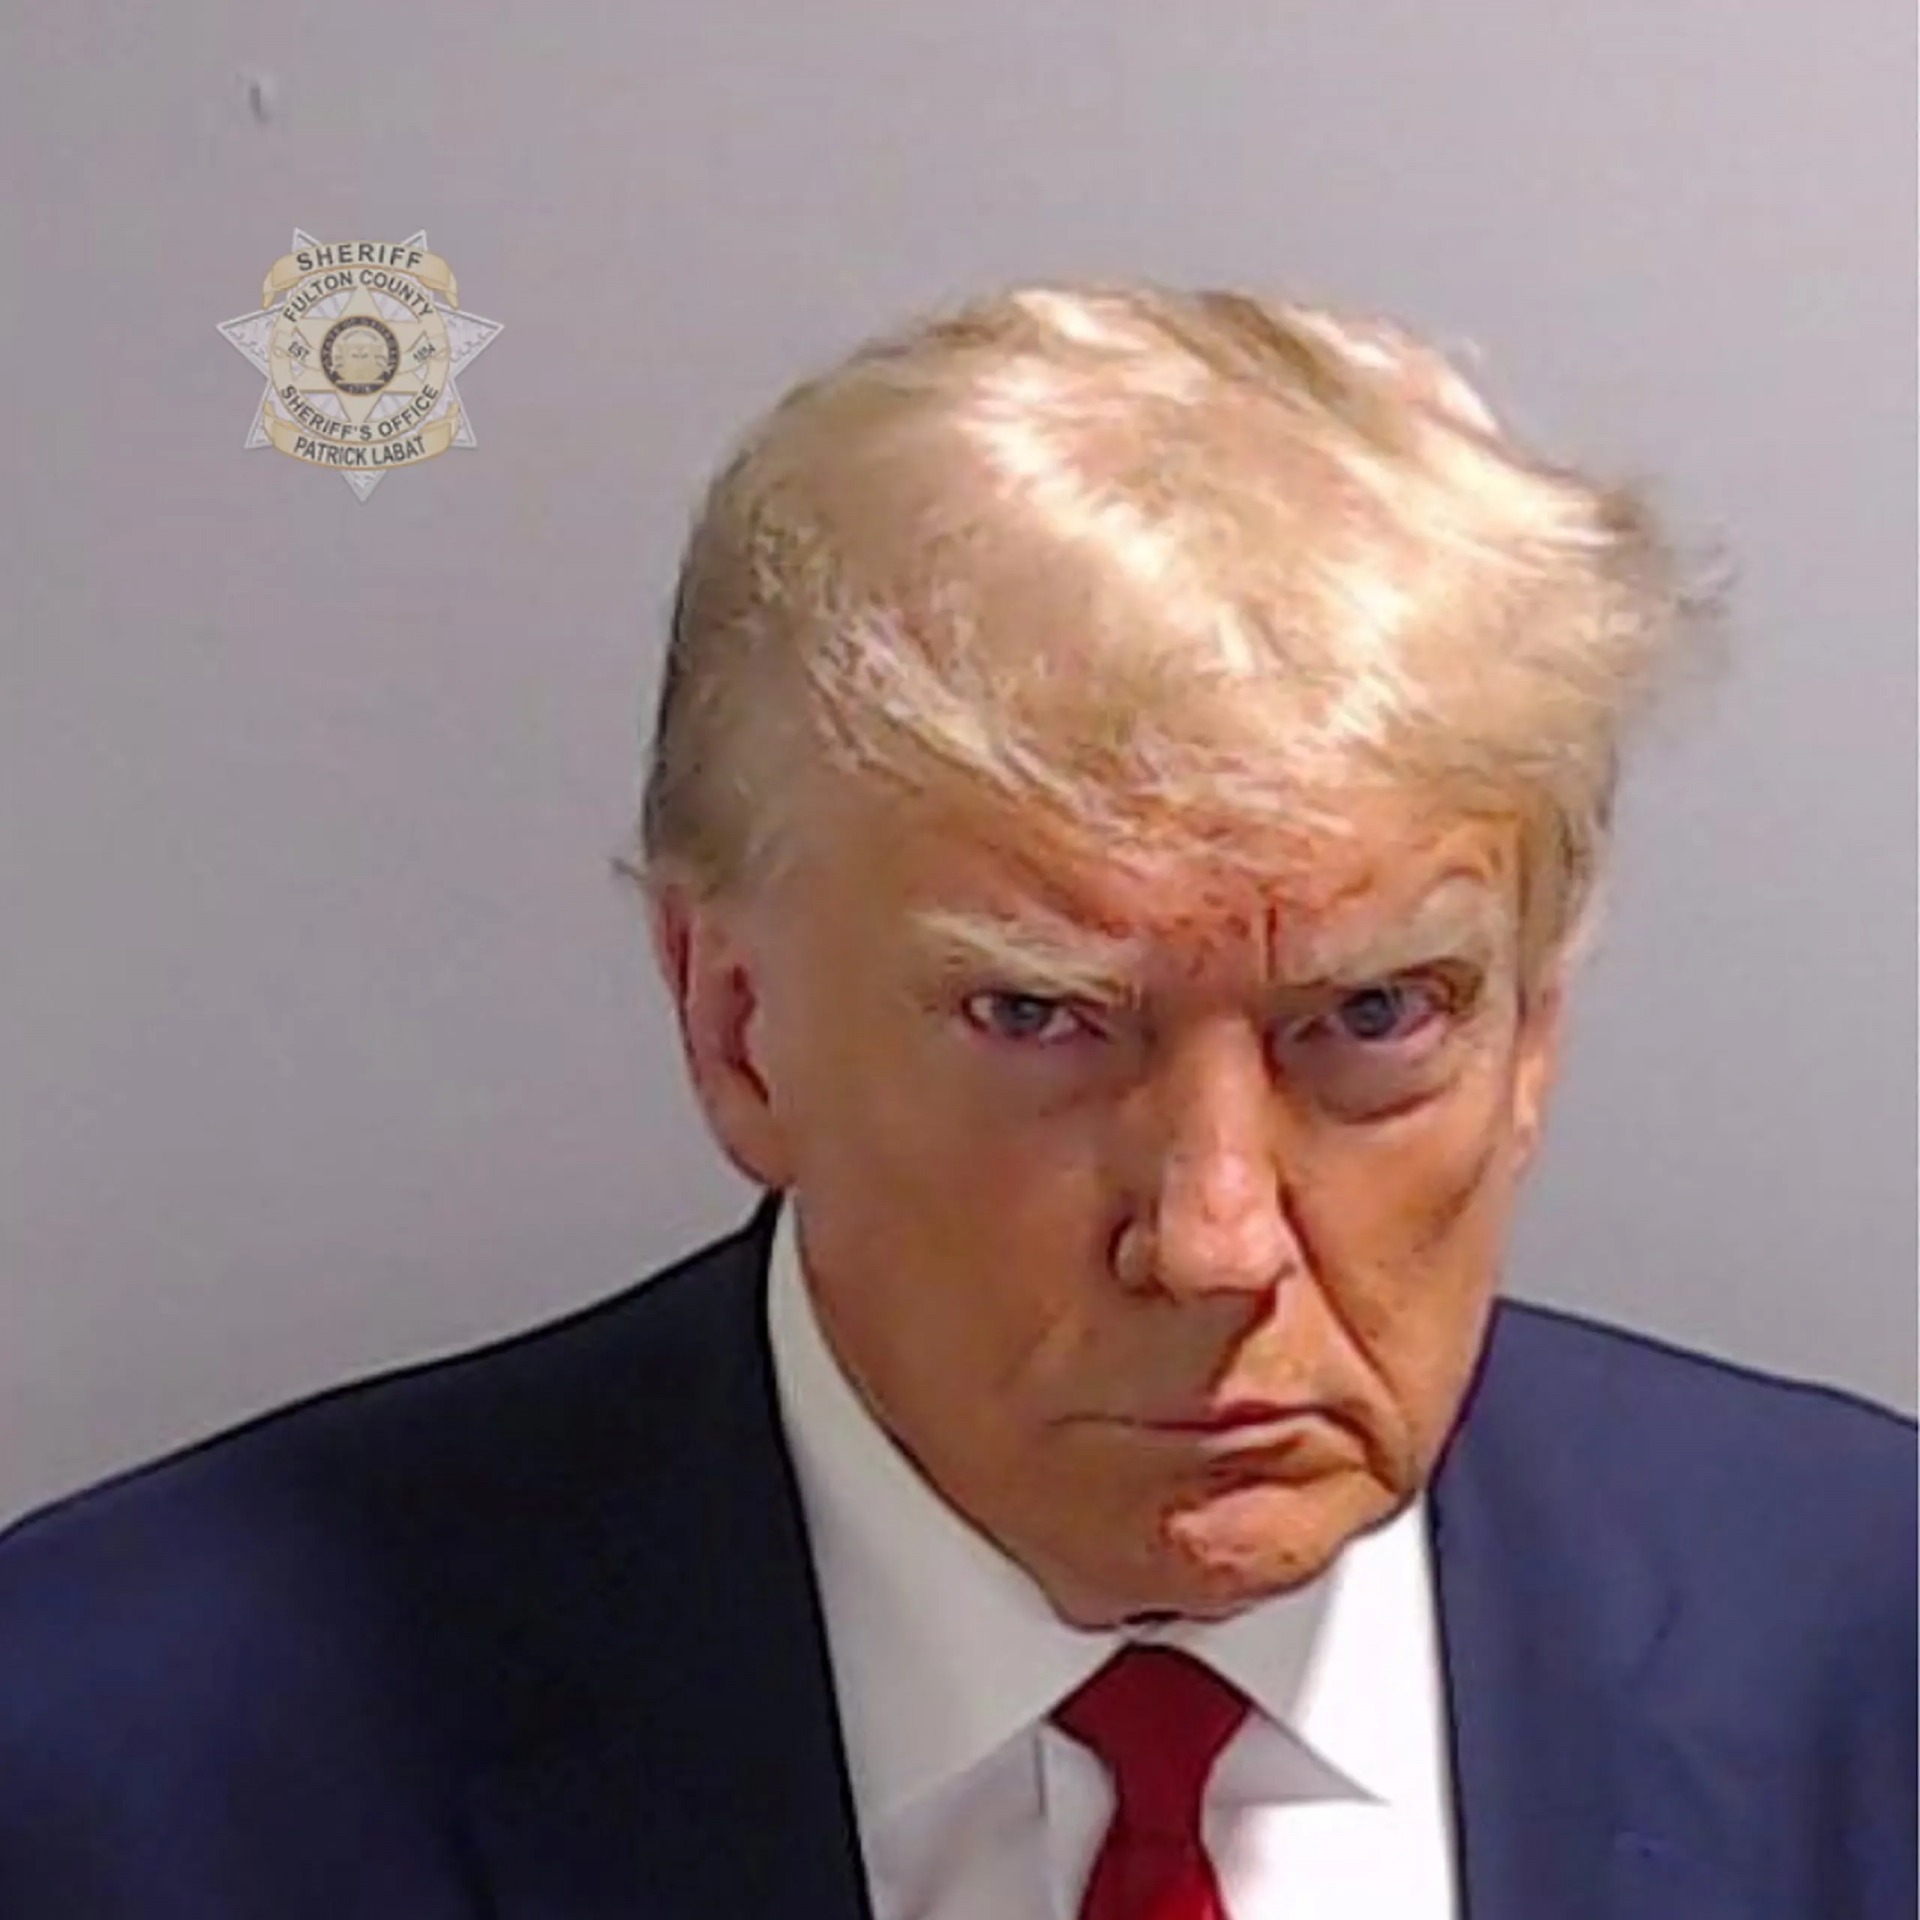 High Quality Donald Trump mug shot Blank Meme Template